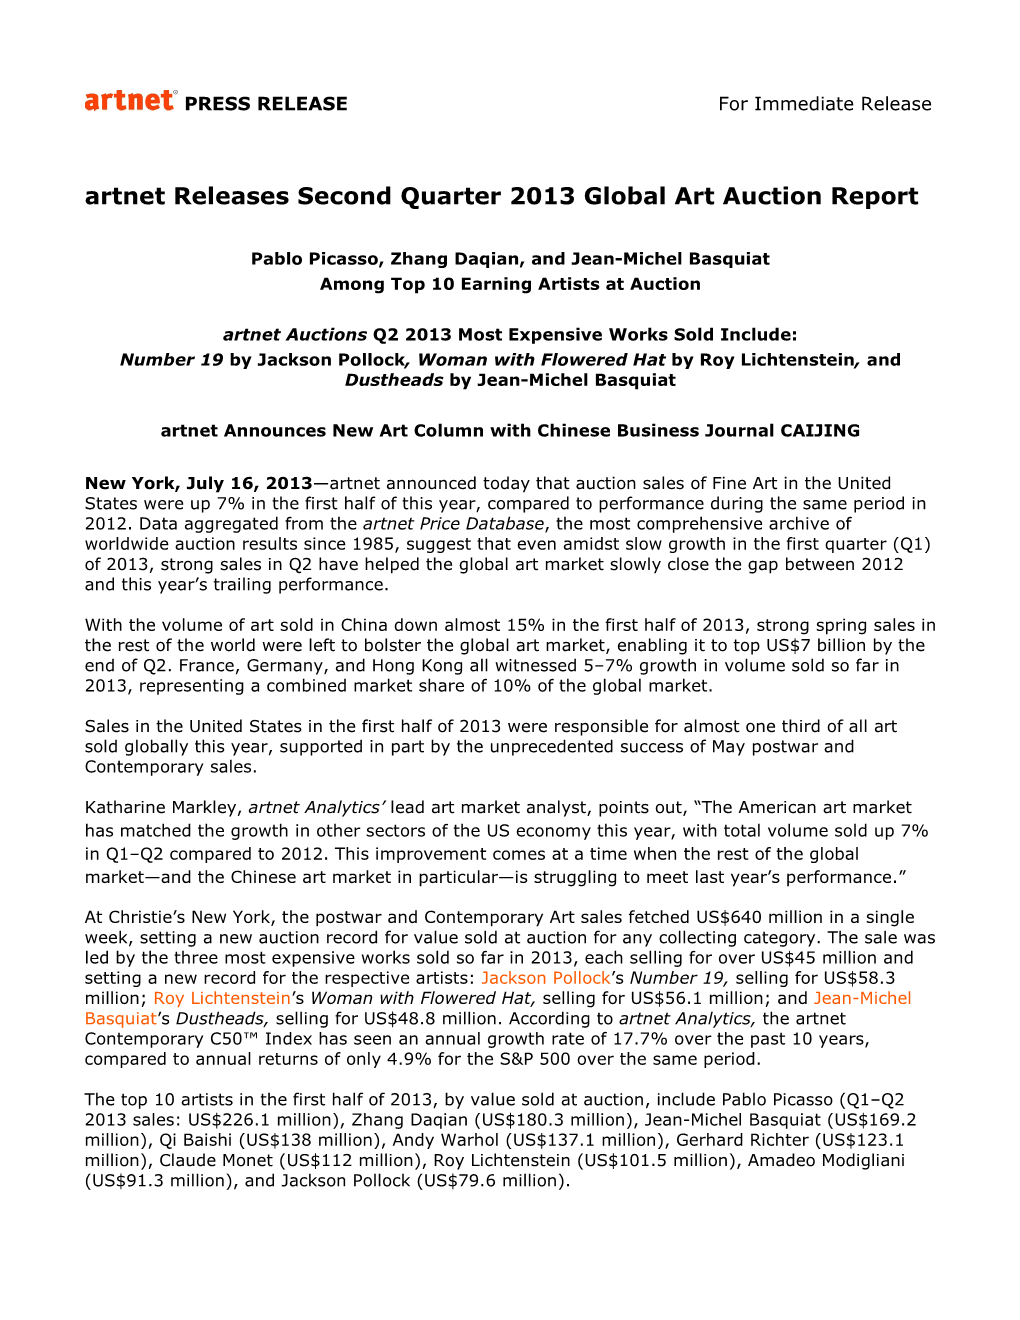 Second Quarter 2013 Global Art Auction Report